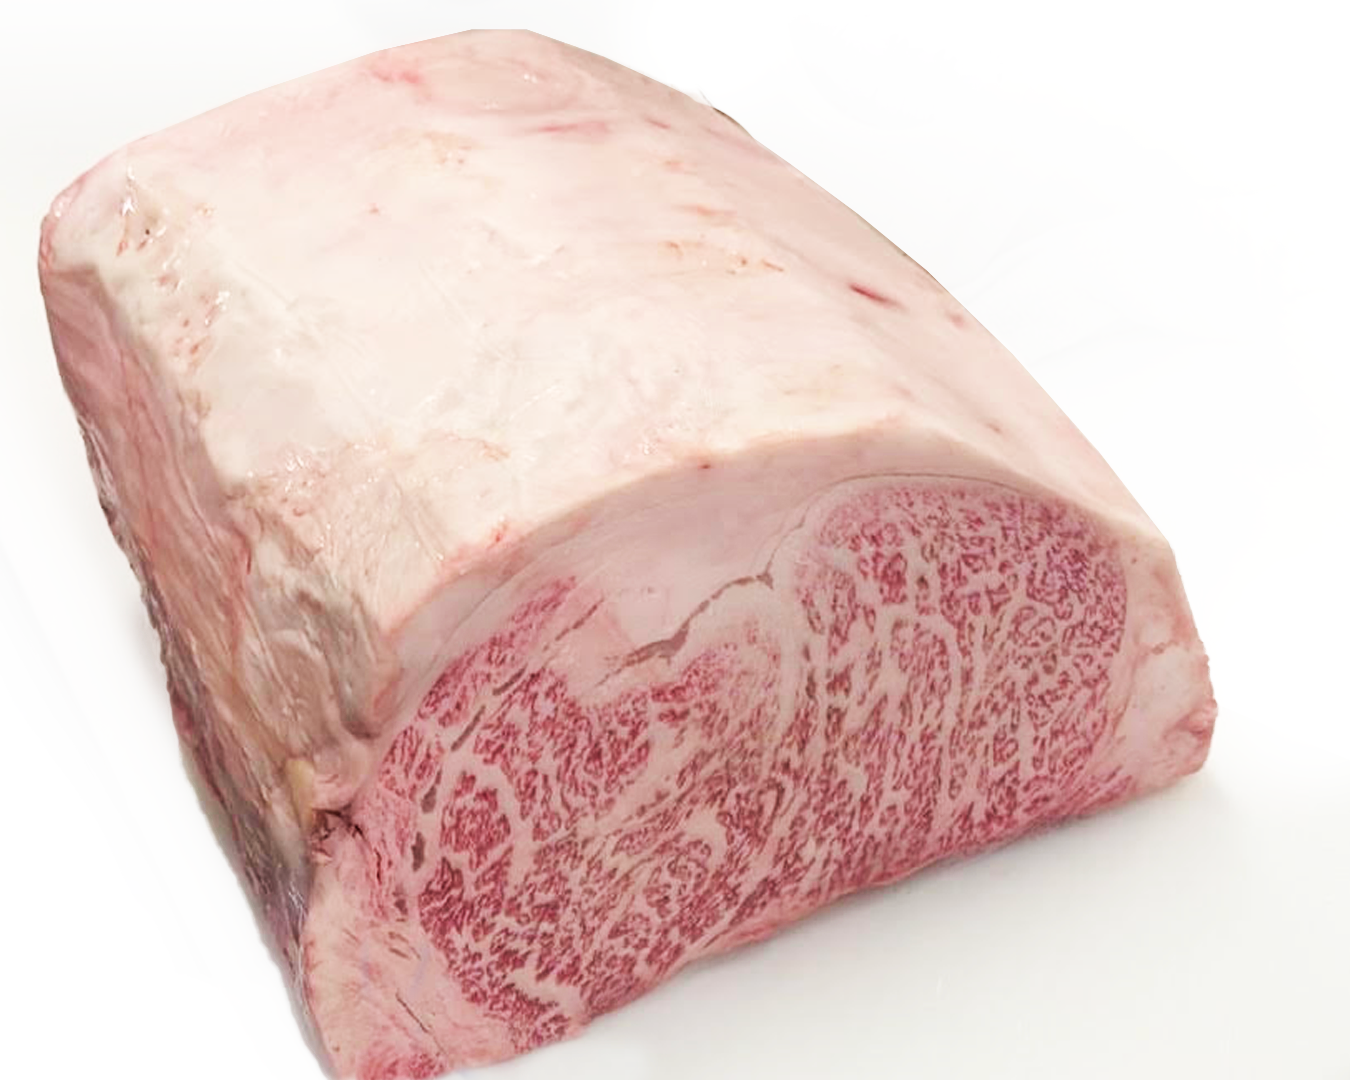 A5 Wagyu American Kobe Beef - Half